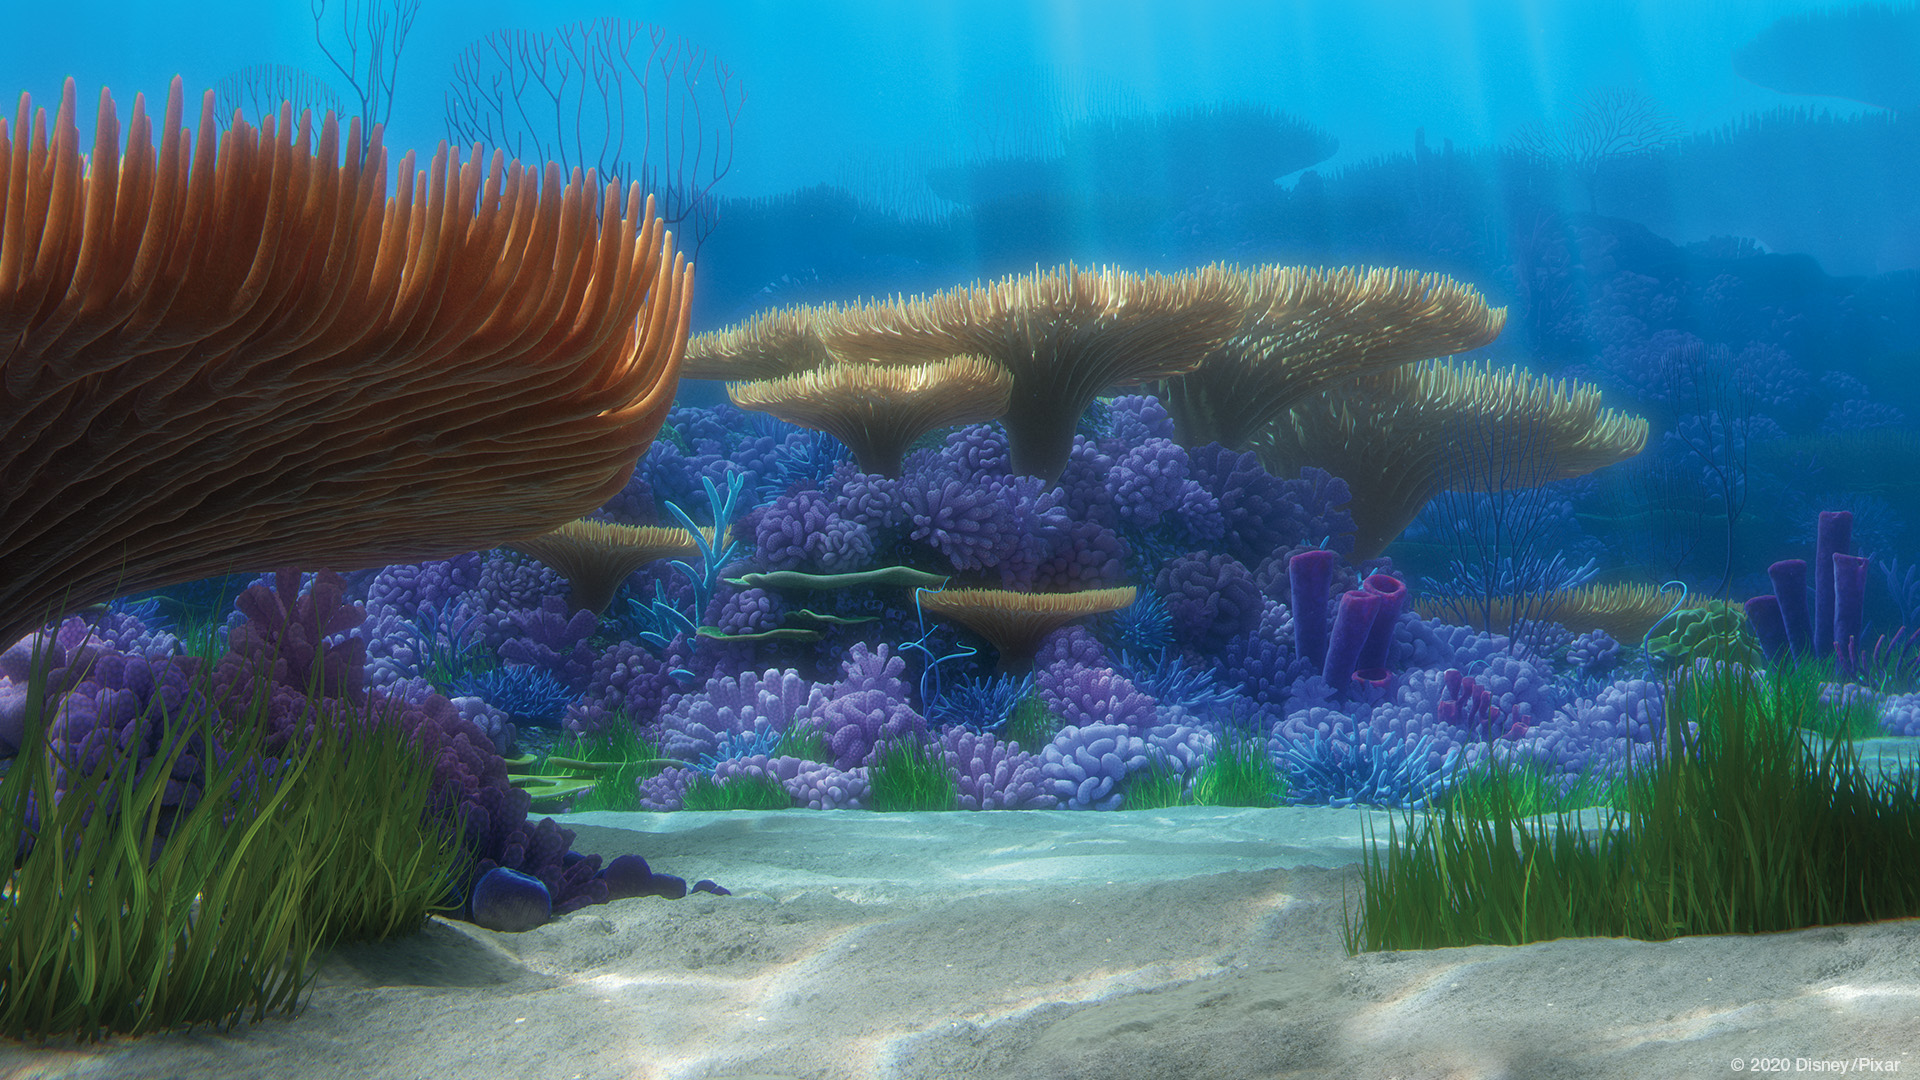 Finding Nemo - Underwater home from the Pixar movie Finding Nemo